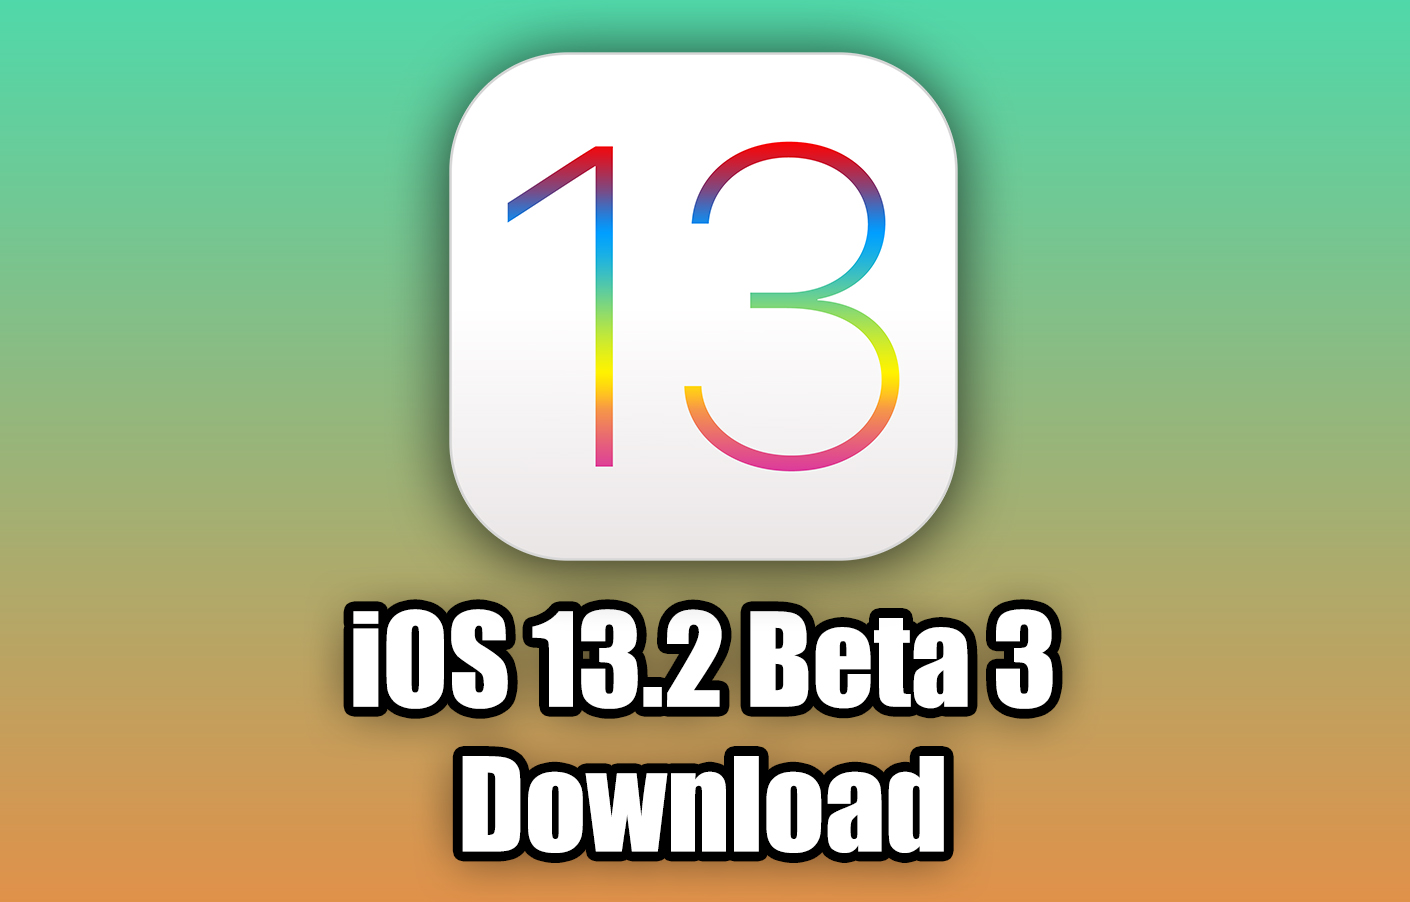 Xcode 13.2 Download